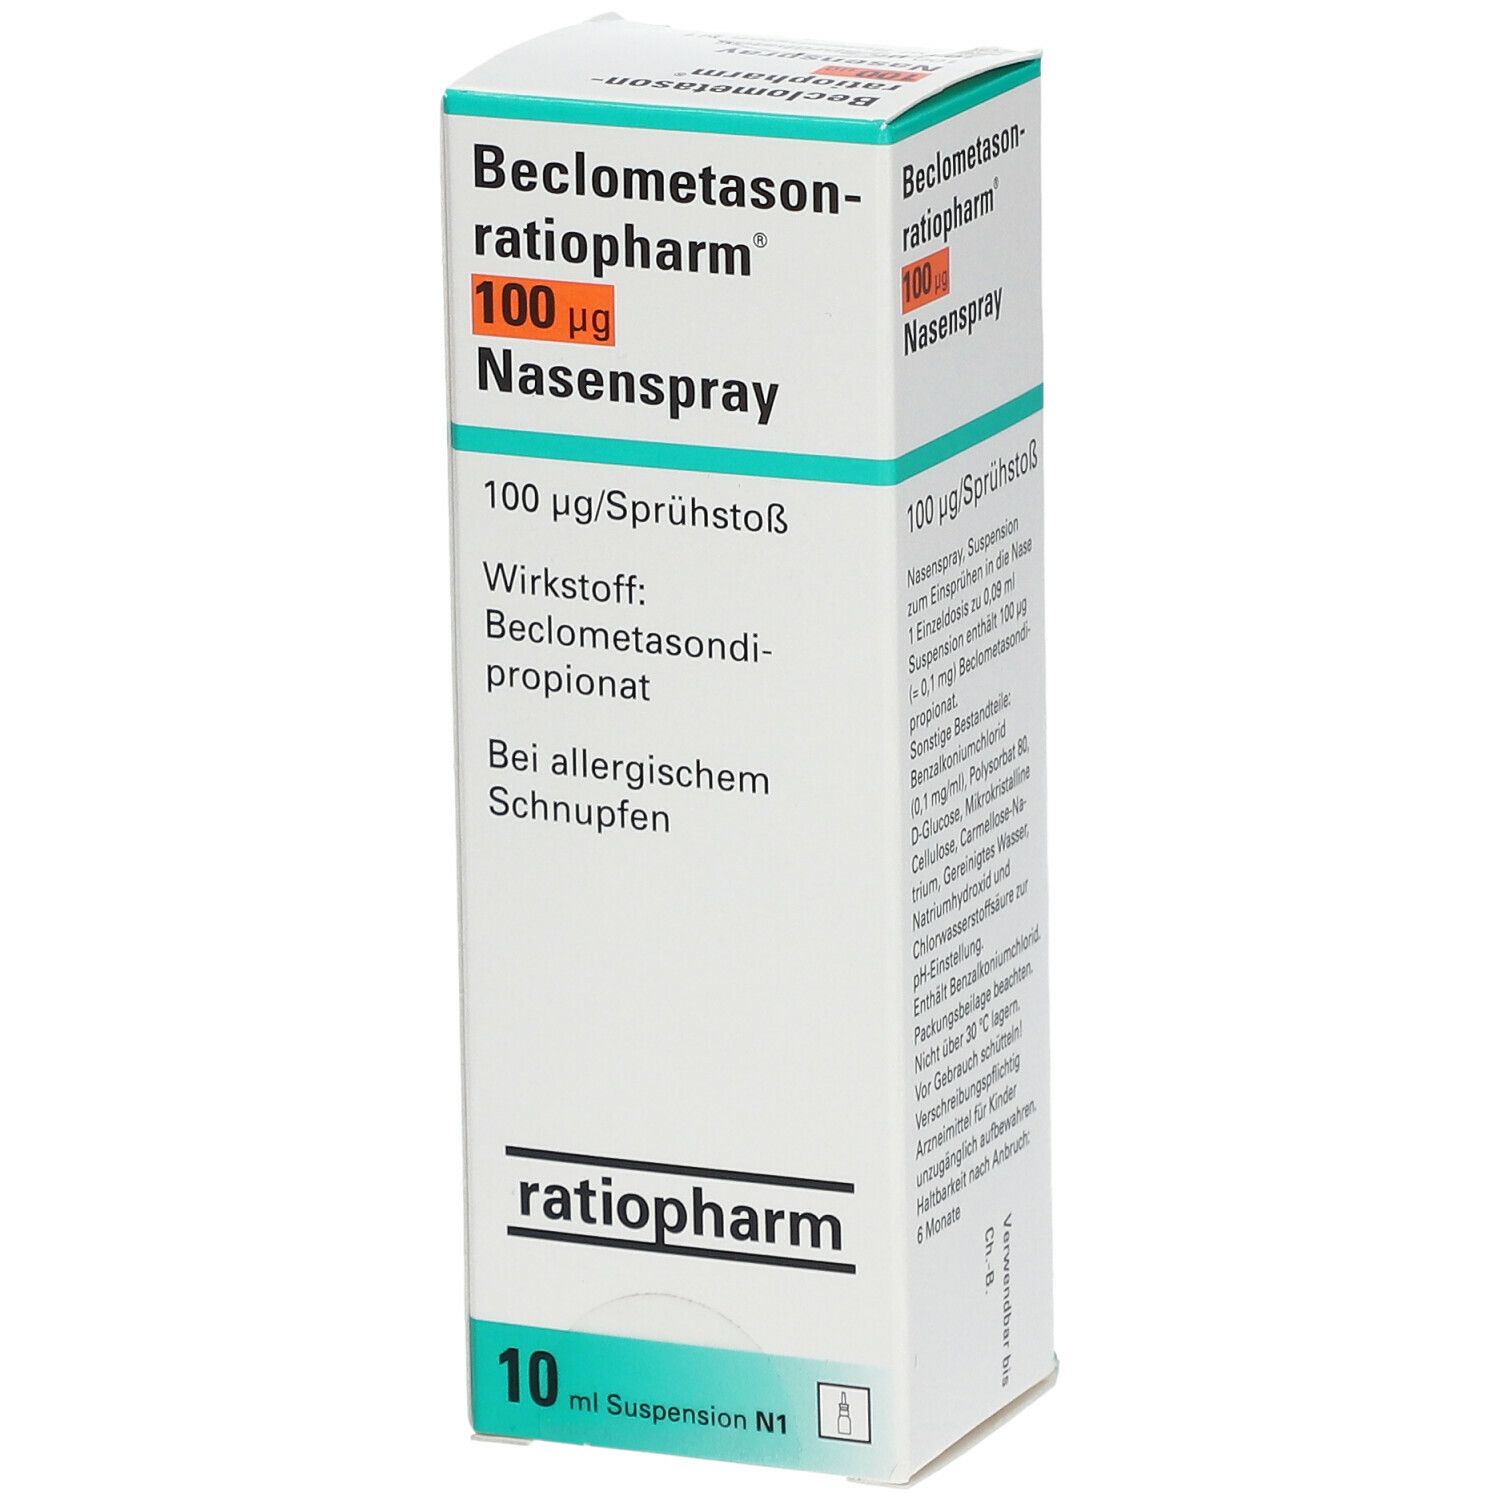 Beclometason-ratiopharm® 100 μg